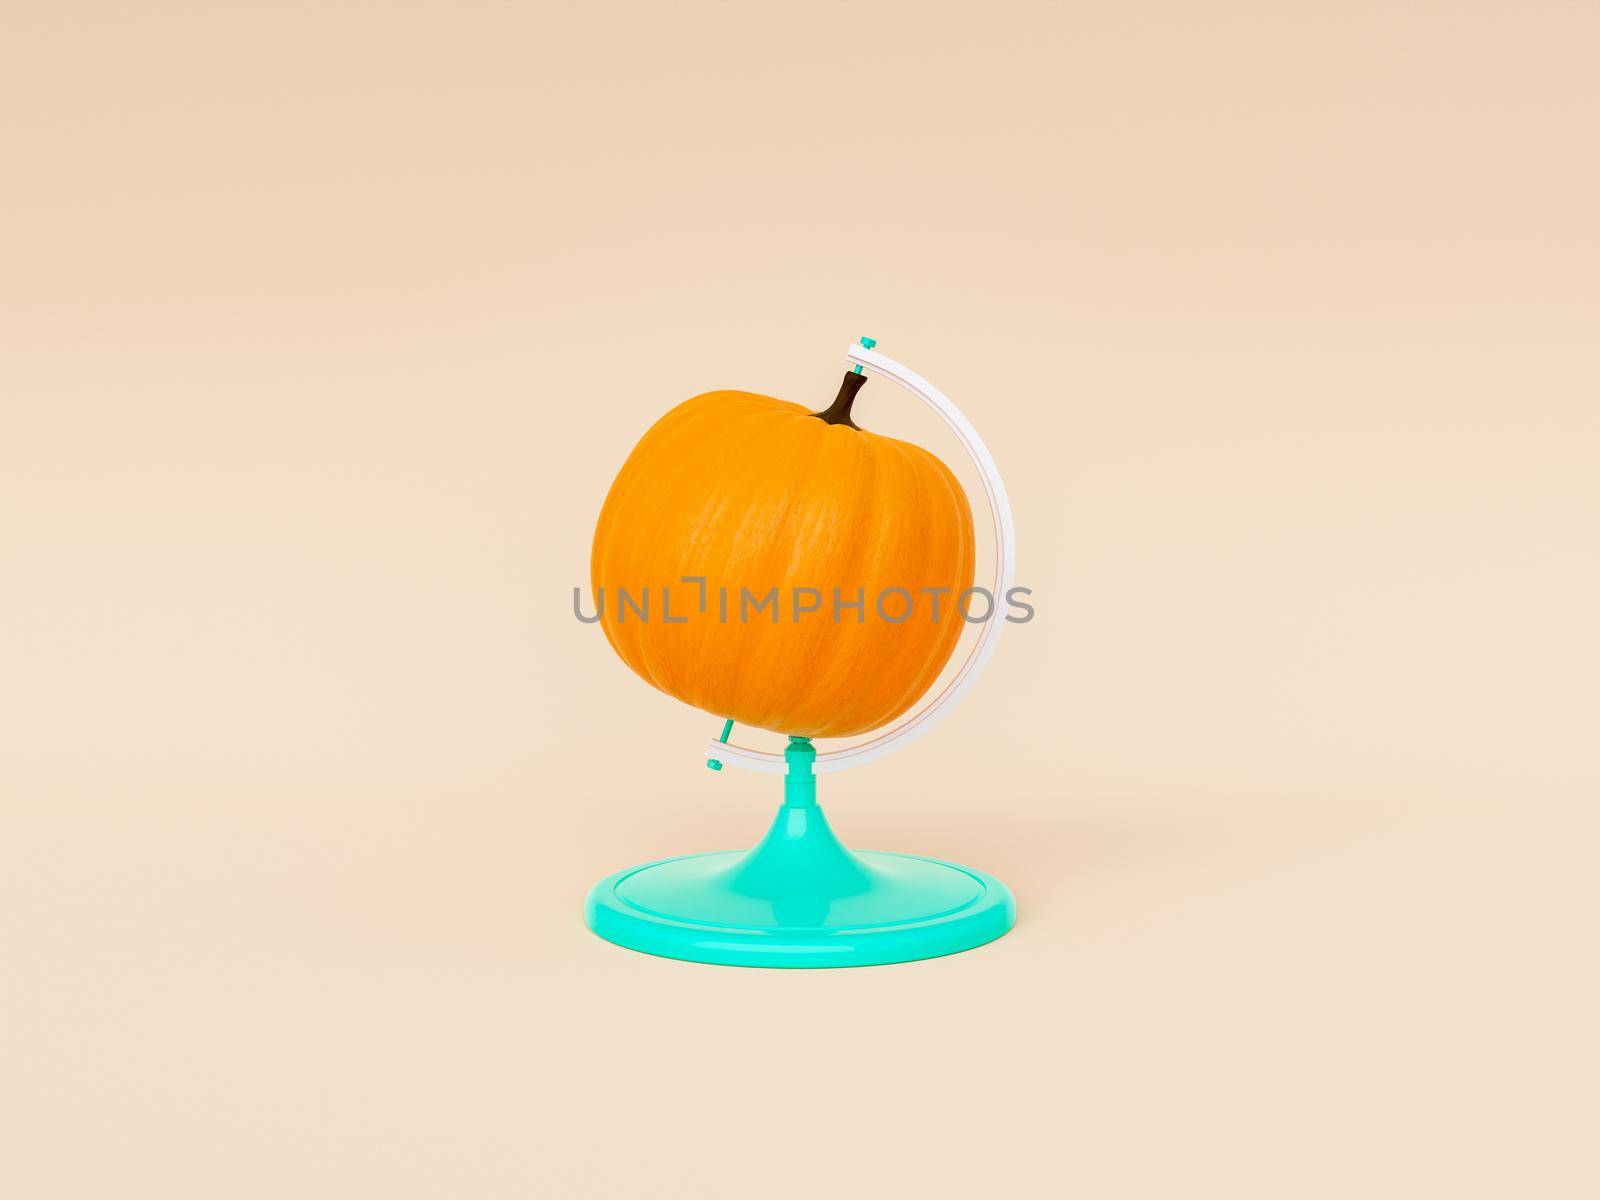 Creative pumpkin shaped globe against beige background by asolano